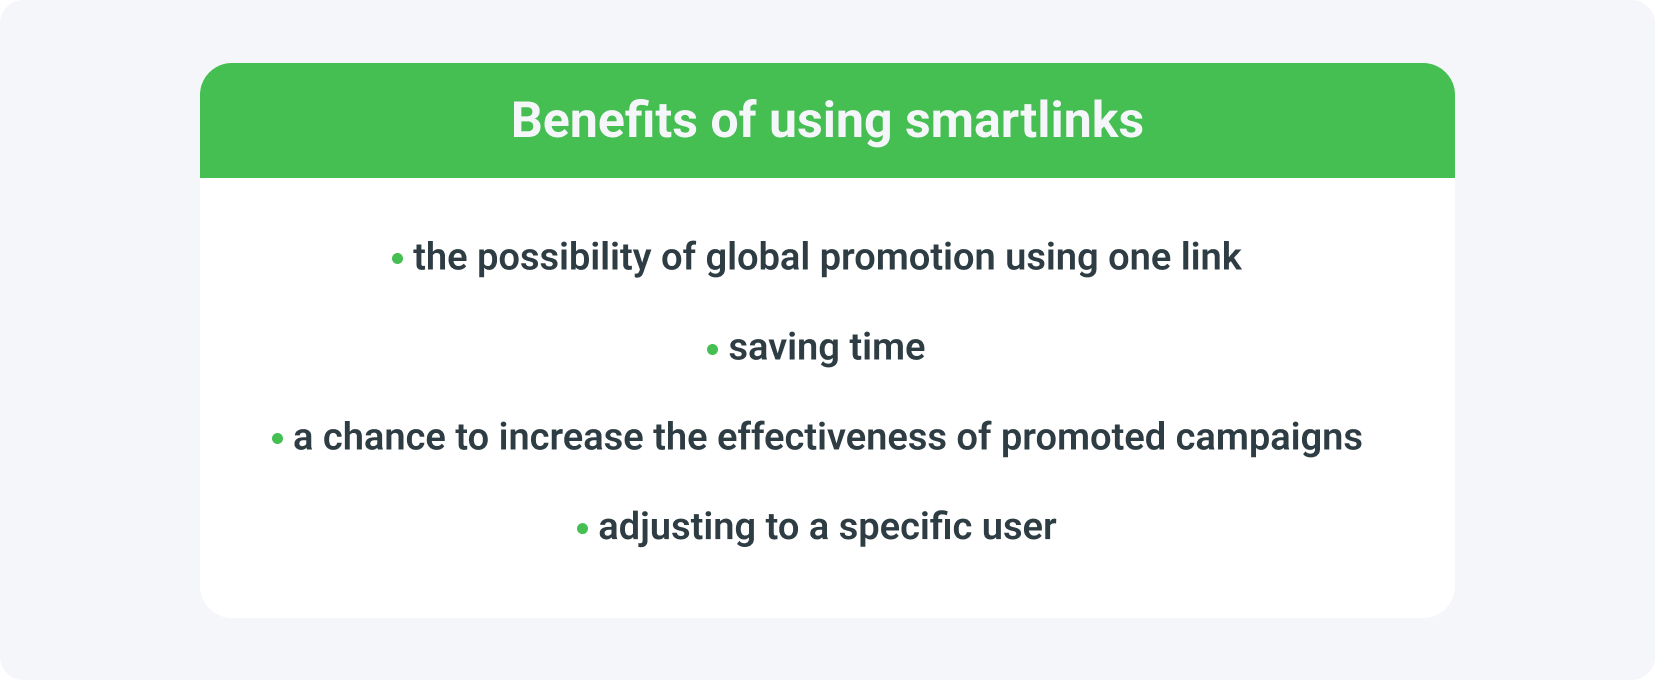 Benefits of using smartlinks